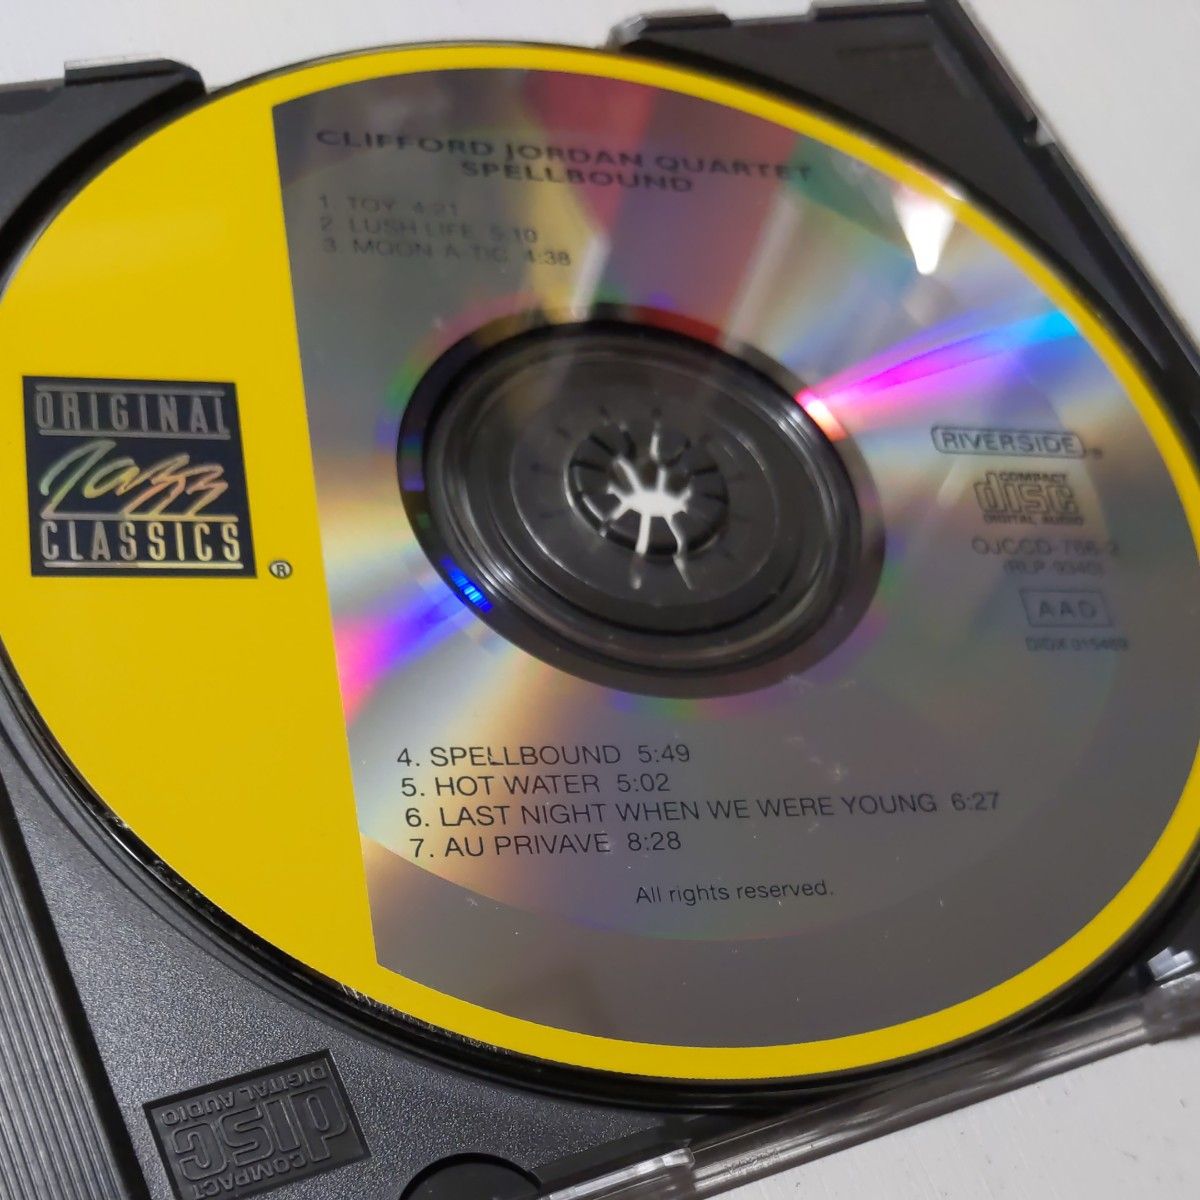 CLIFFORD JORDAN QUARTET クリフォード・ジョーダンカルテット SPELLBOUND CD